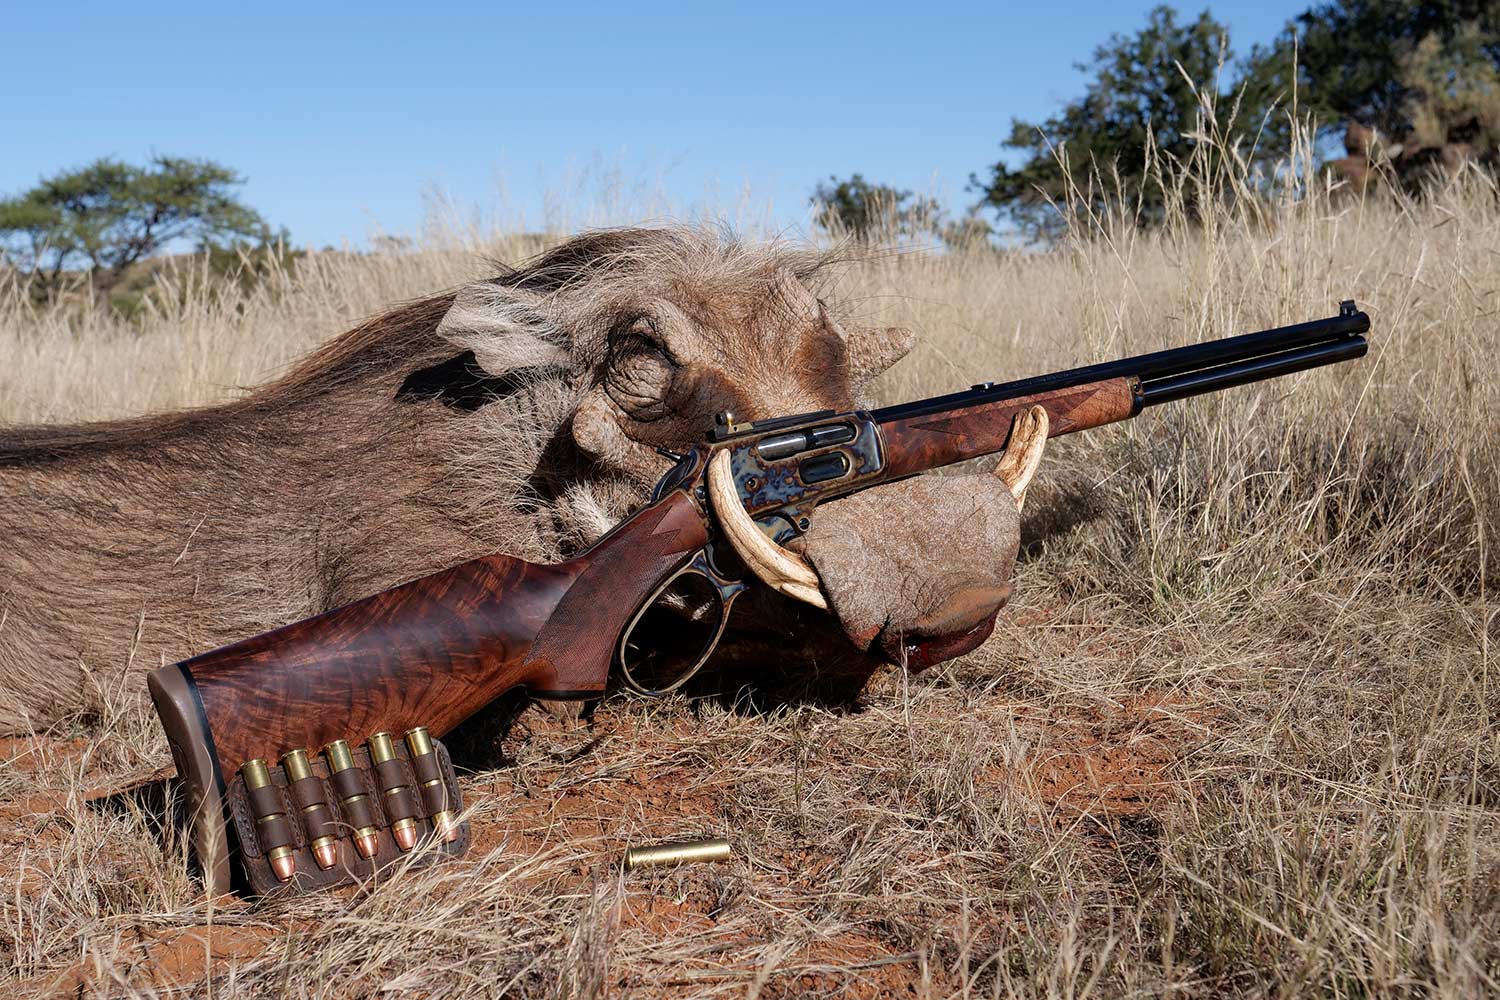 A marlin 1895 hunting rifle leaning against a boar.